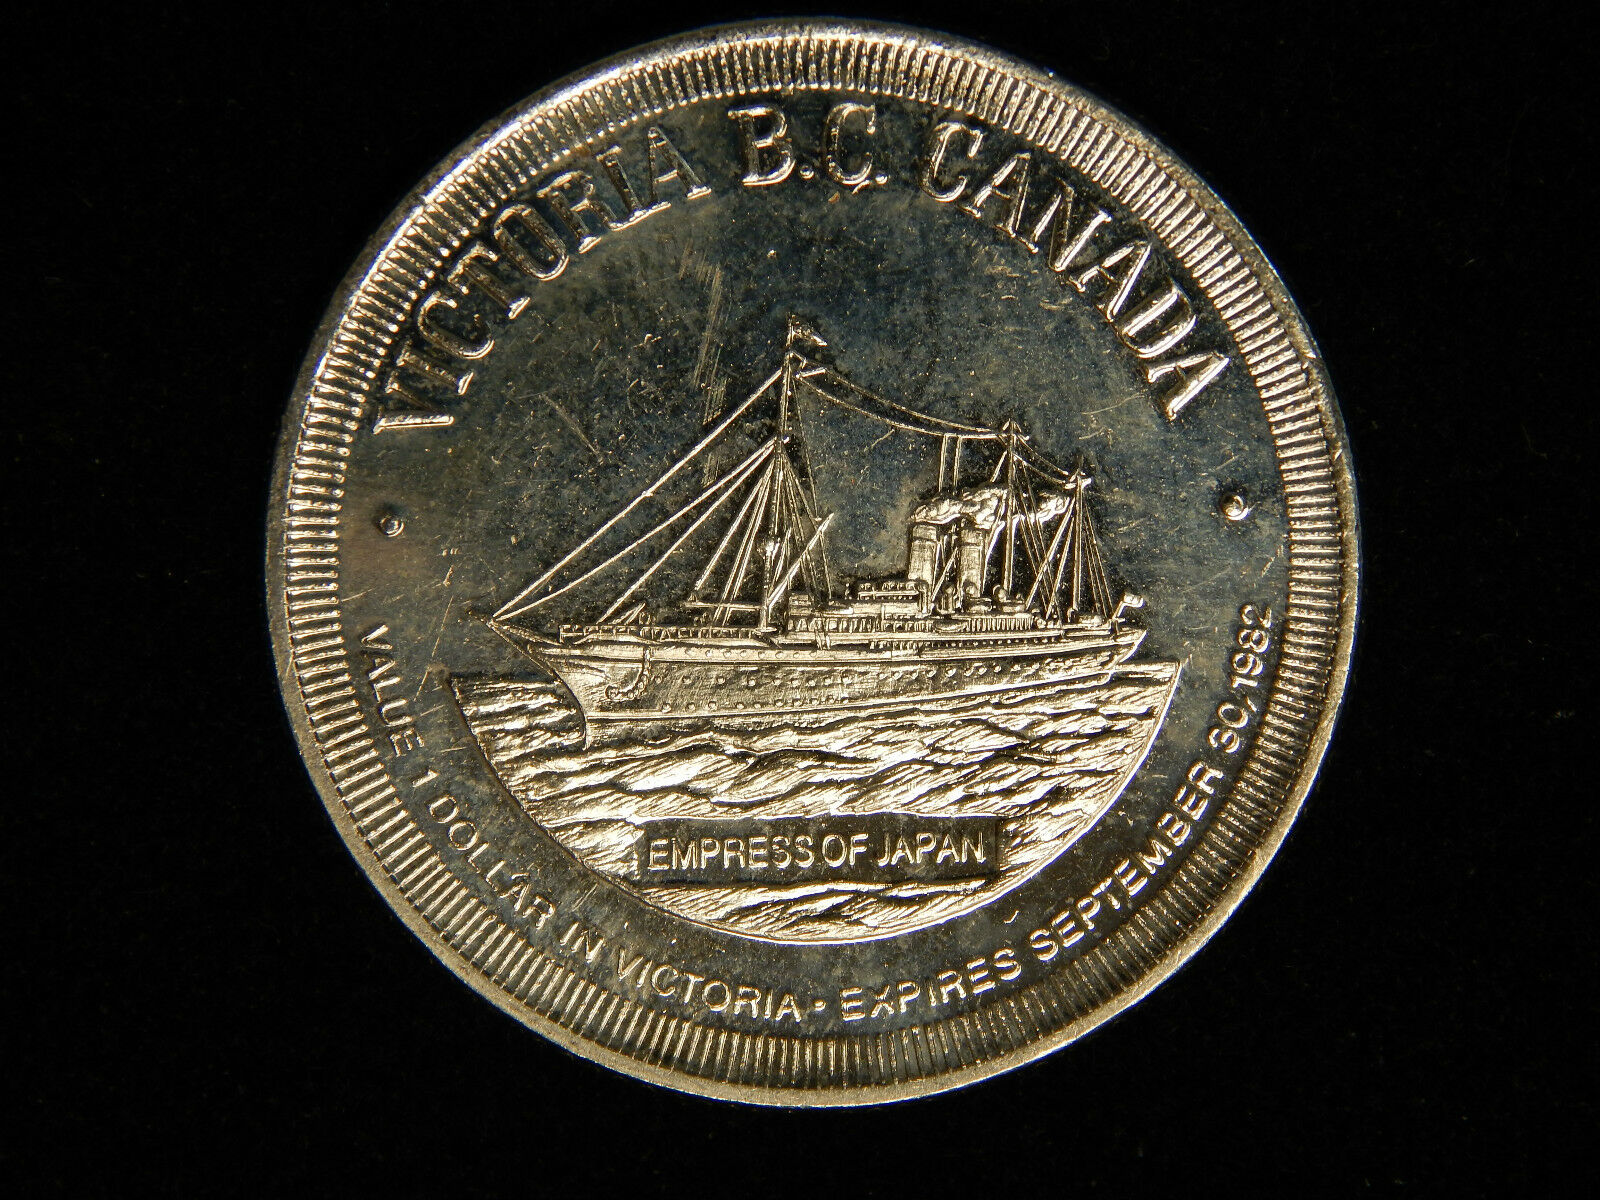 1982 Canada Victoria B.c. Trade Dollar